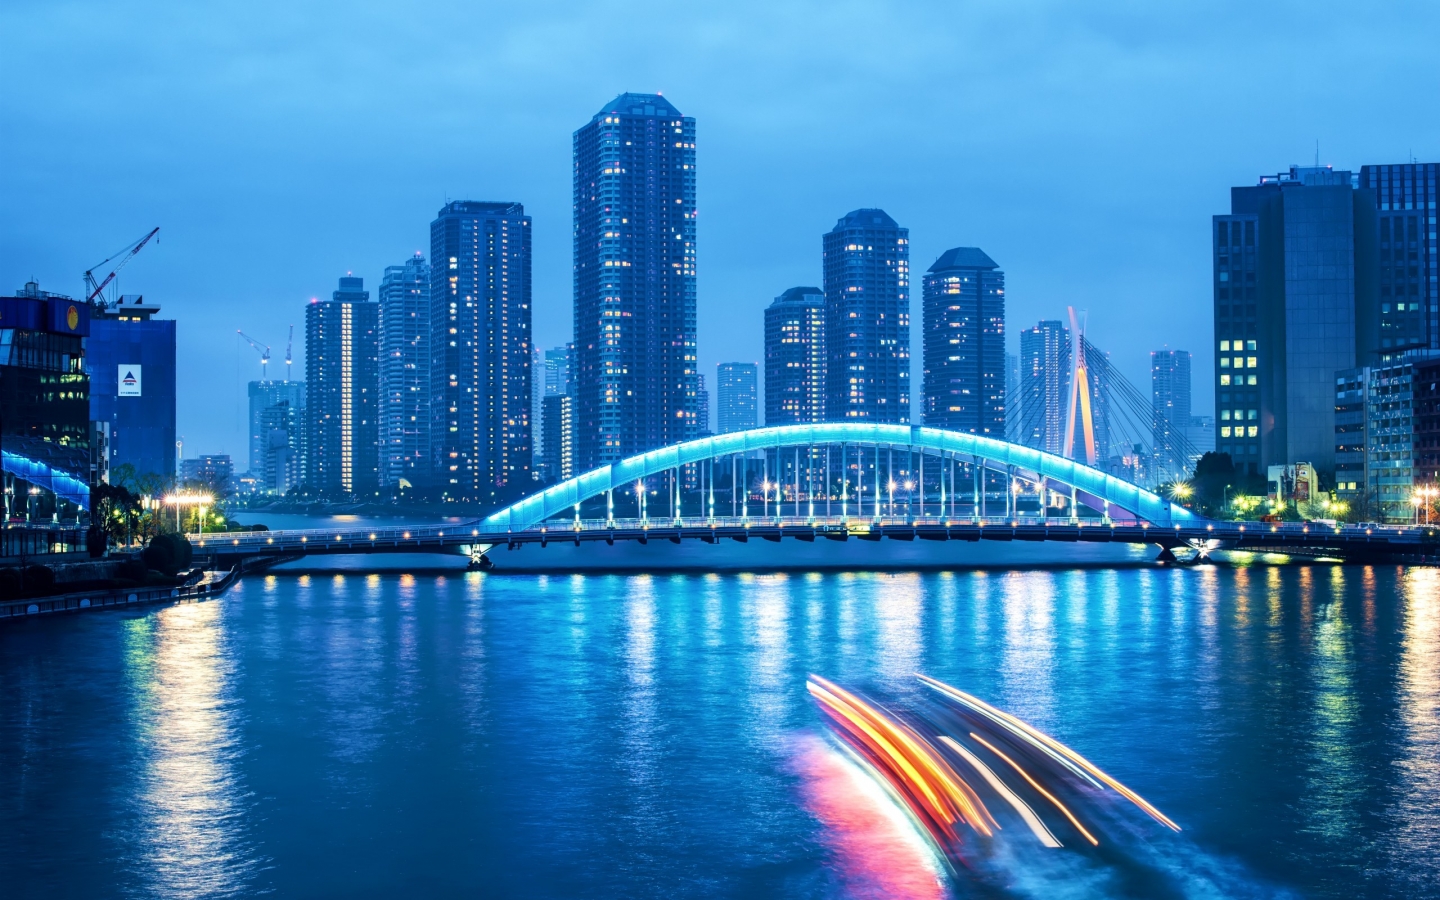 Tokyo Night Bridge Landscape for 1440 x 900 widescreen resolution